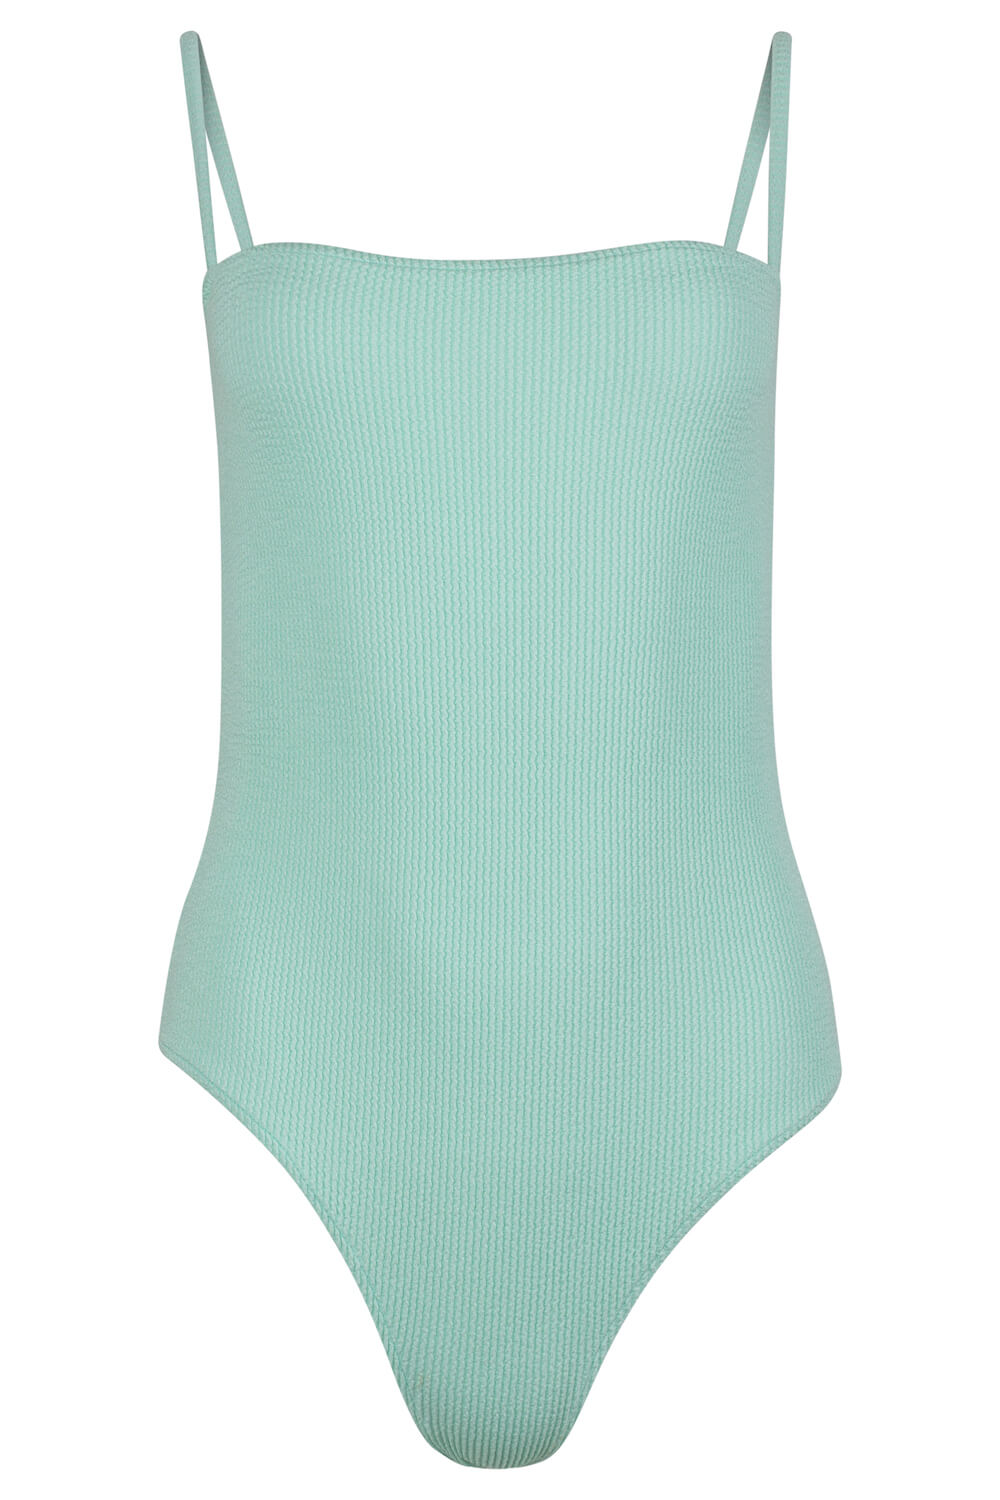 Girl’s one-piece swimsuit in Aqua sky blue